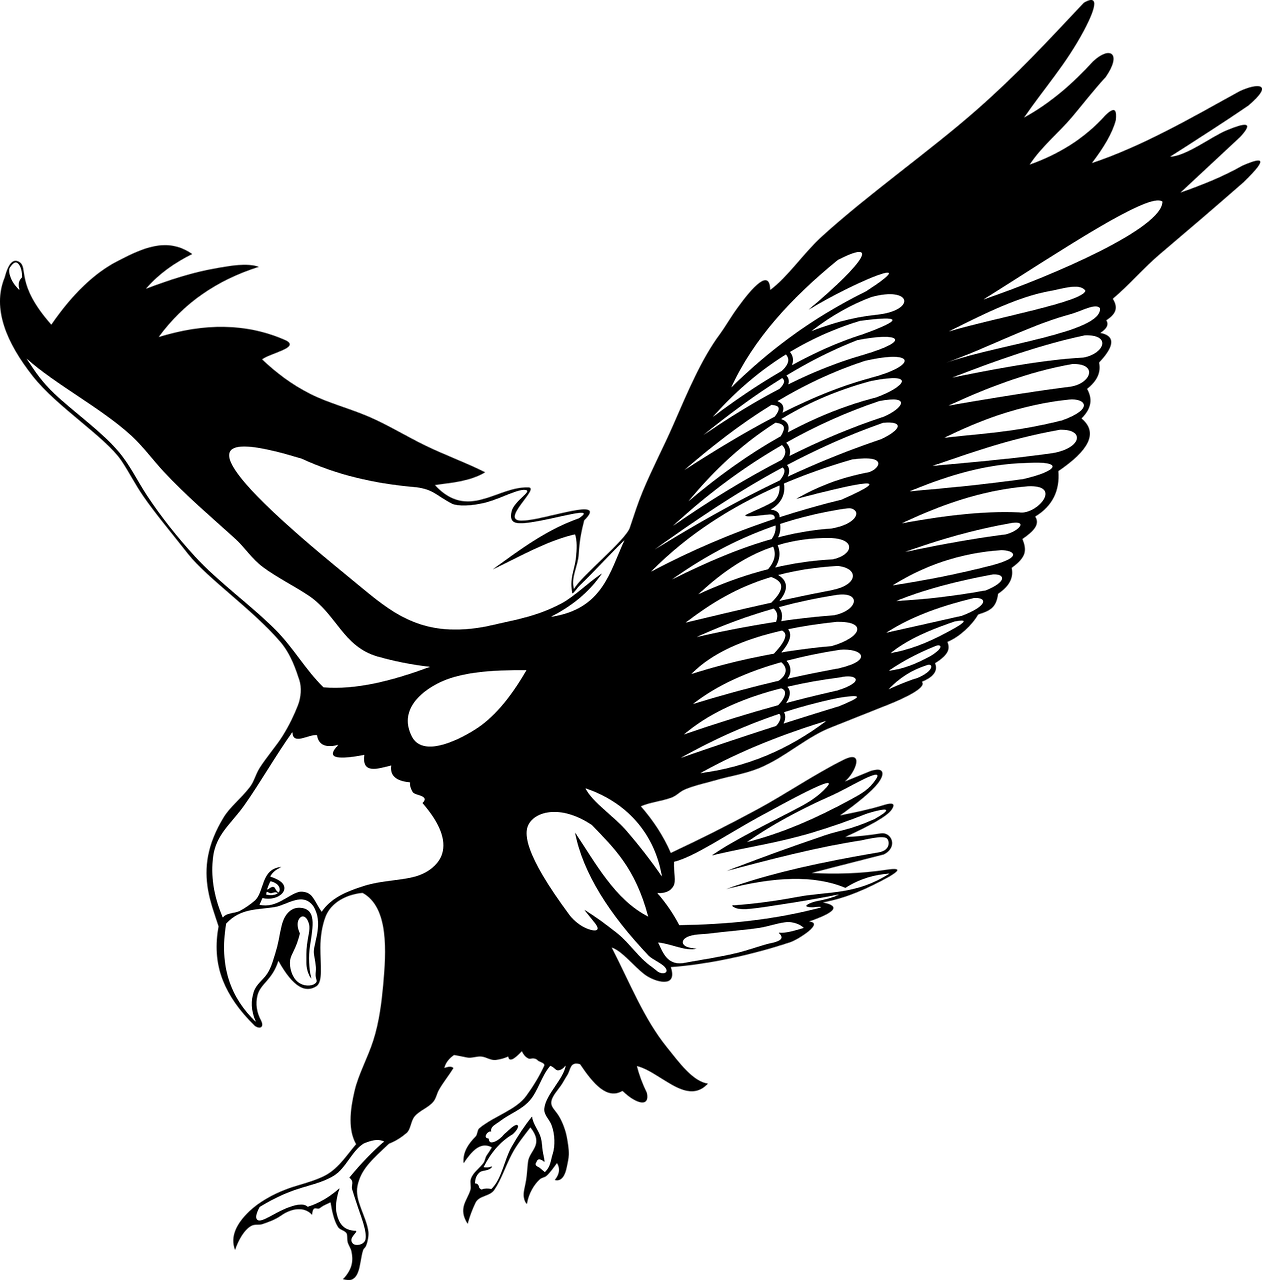 a black and white image of a bird, vector art, inspired by Jan Karpíšek, hurufiyya, black backround. inkscape, patriotism, fearow, hawk